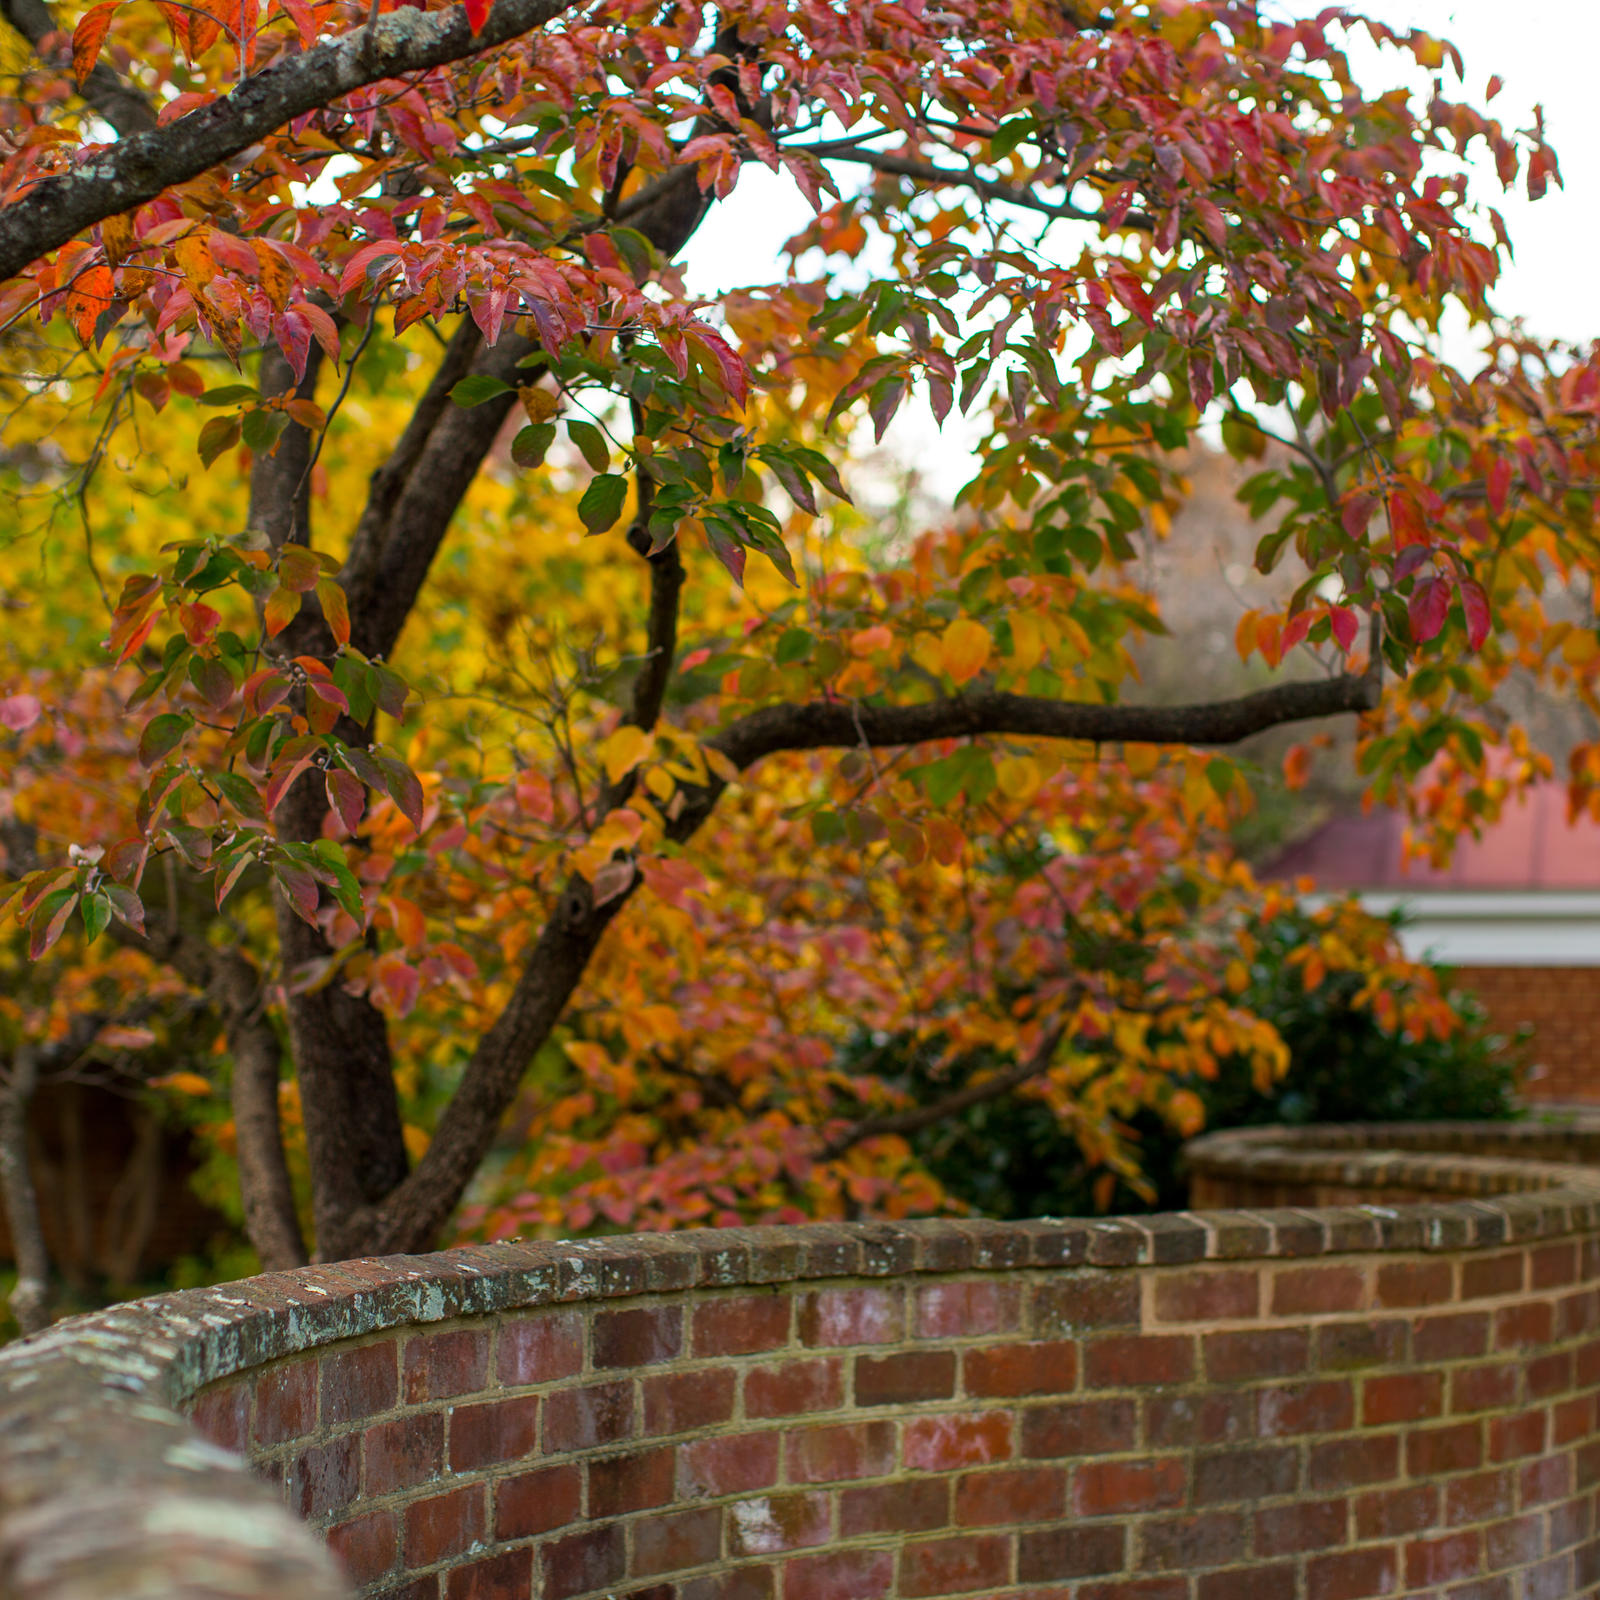 Brick wall and fall foliage